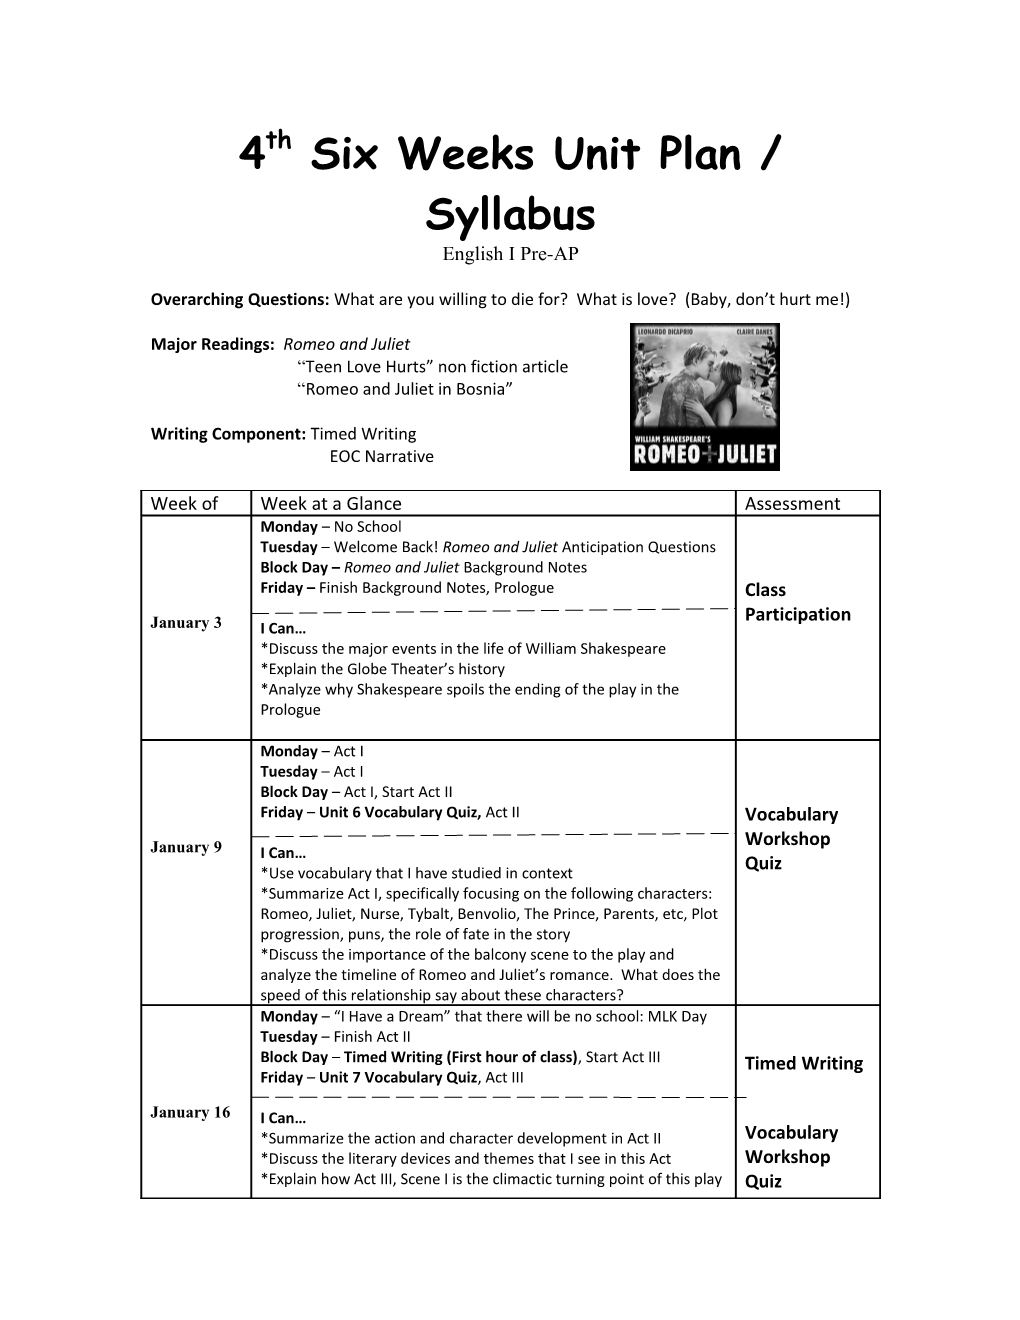 4Th Six Weeks Unit Plan / Syllabus